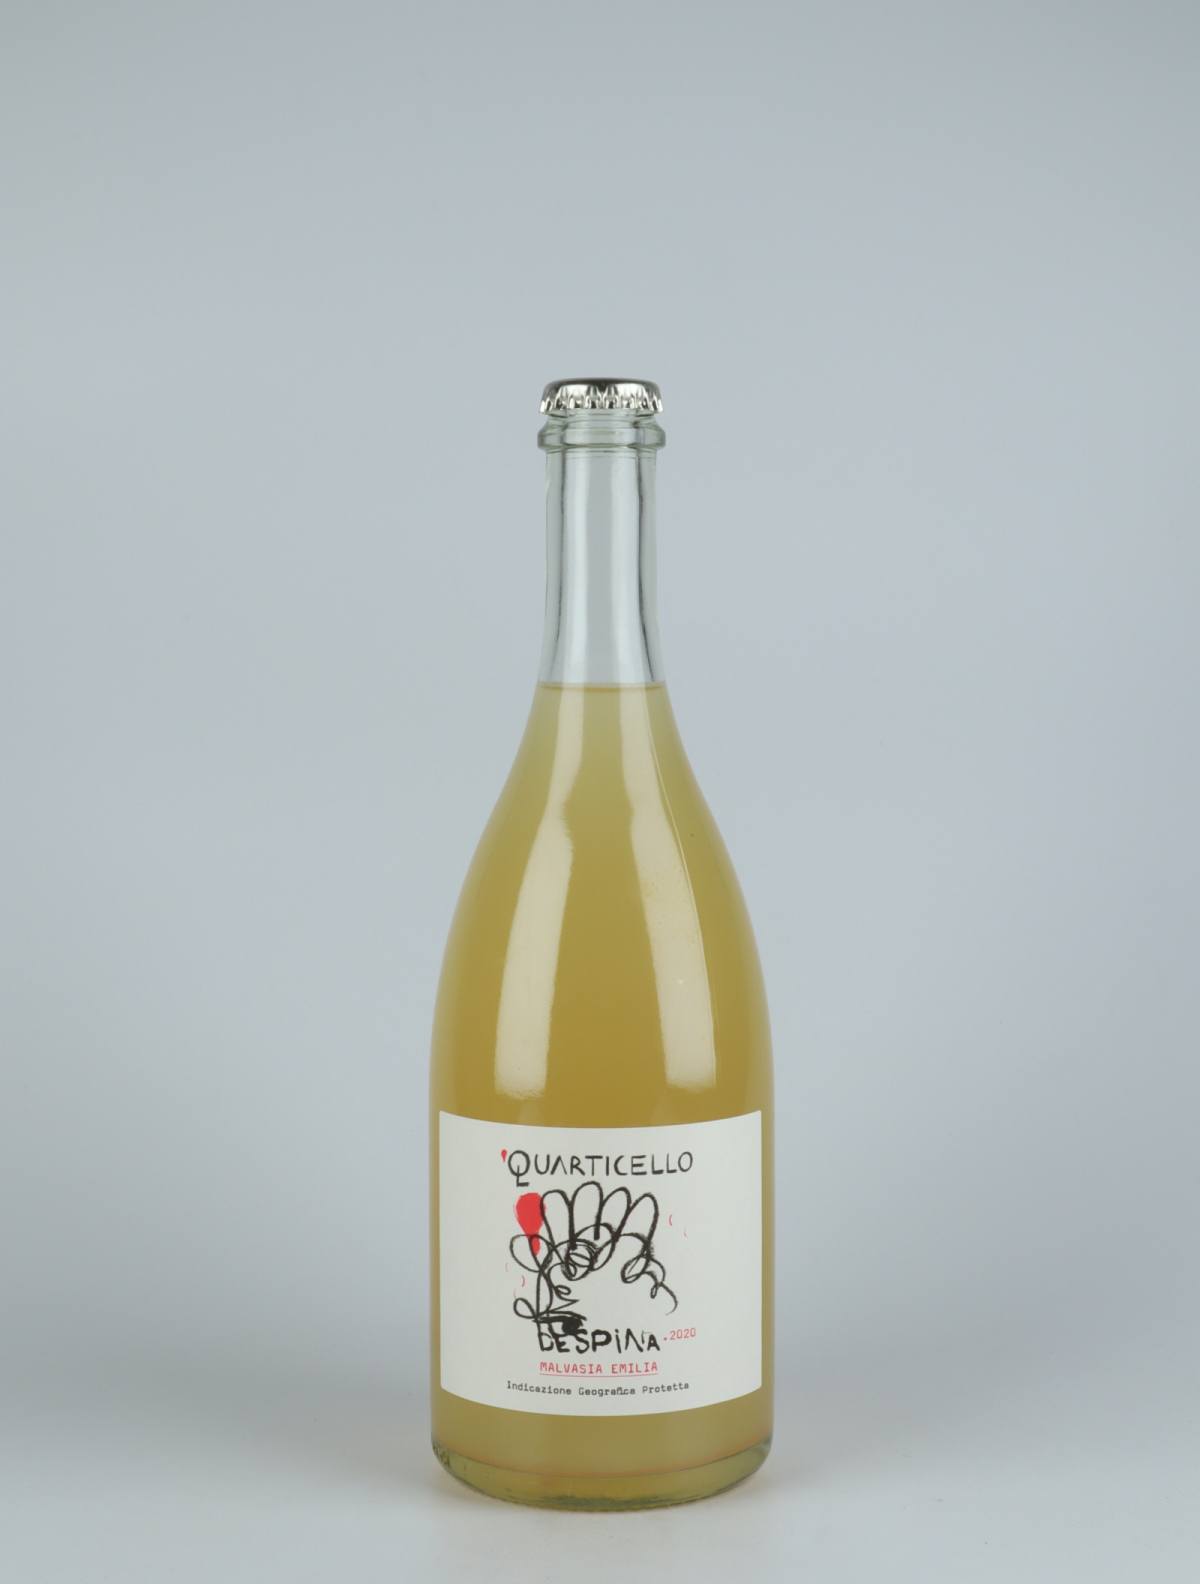 A bottle 2020 Despina Sparkling from Quarticello, Emilia-Romagna in Italy